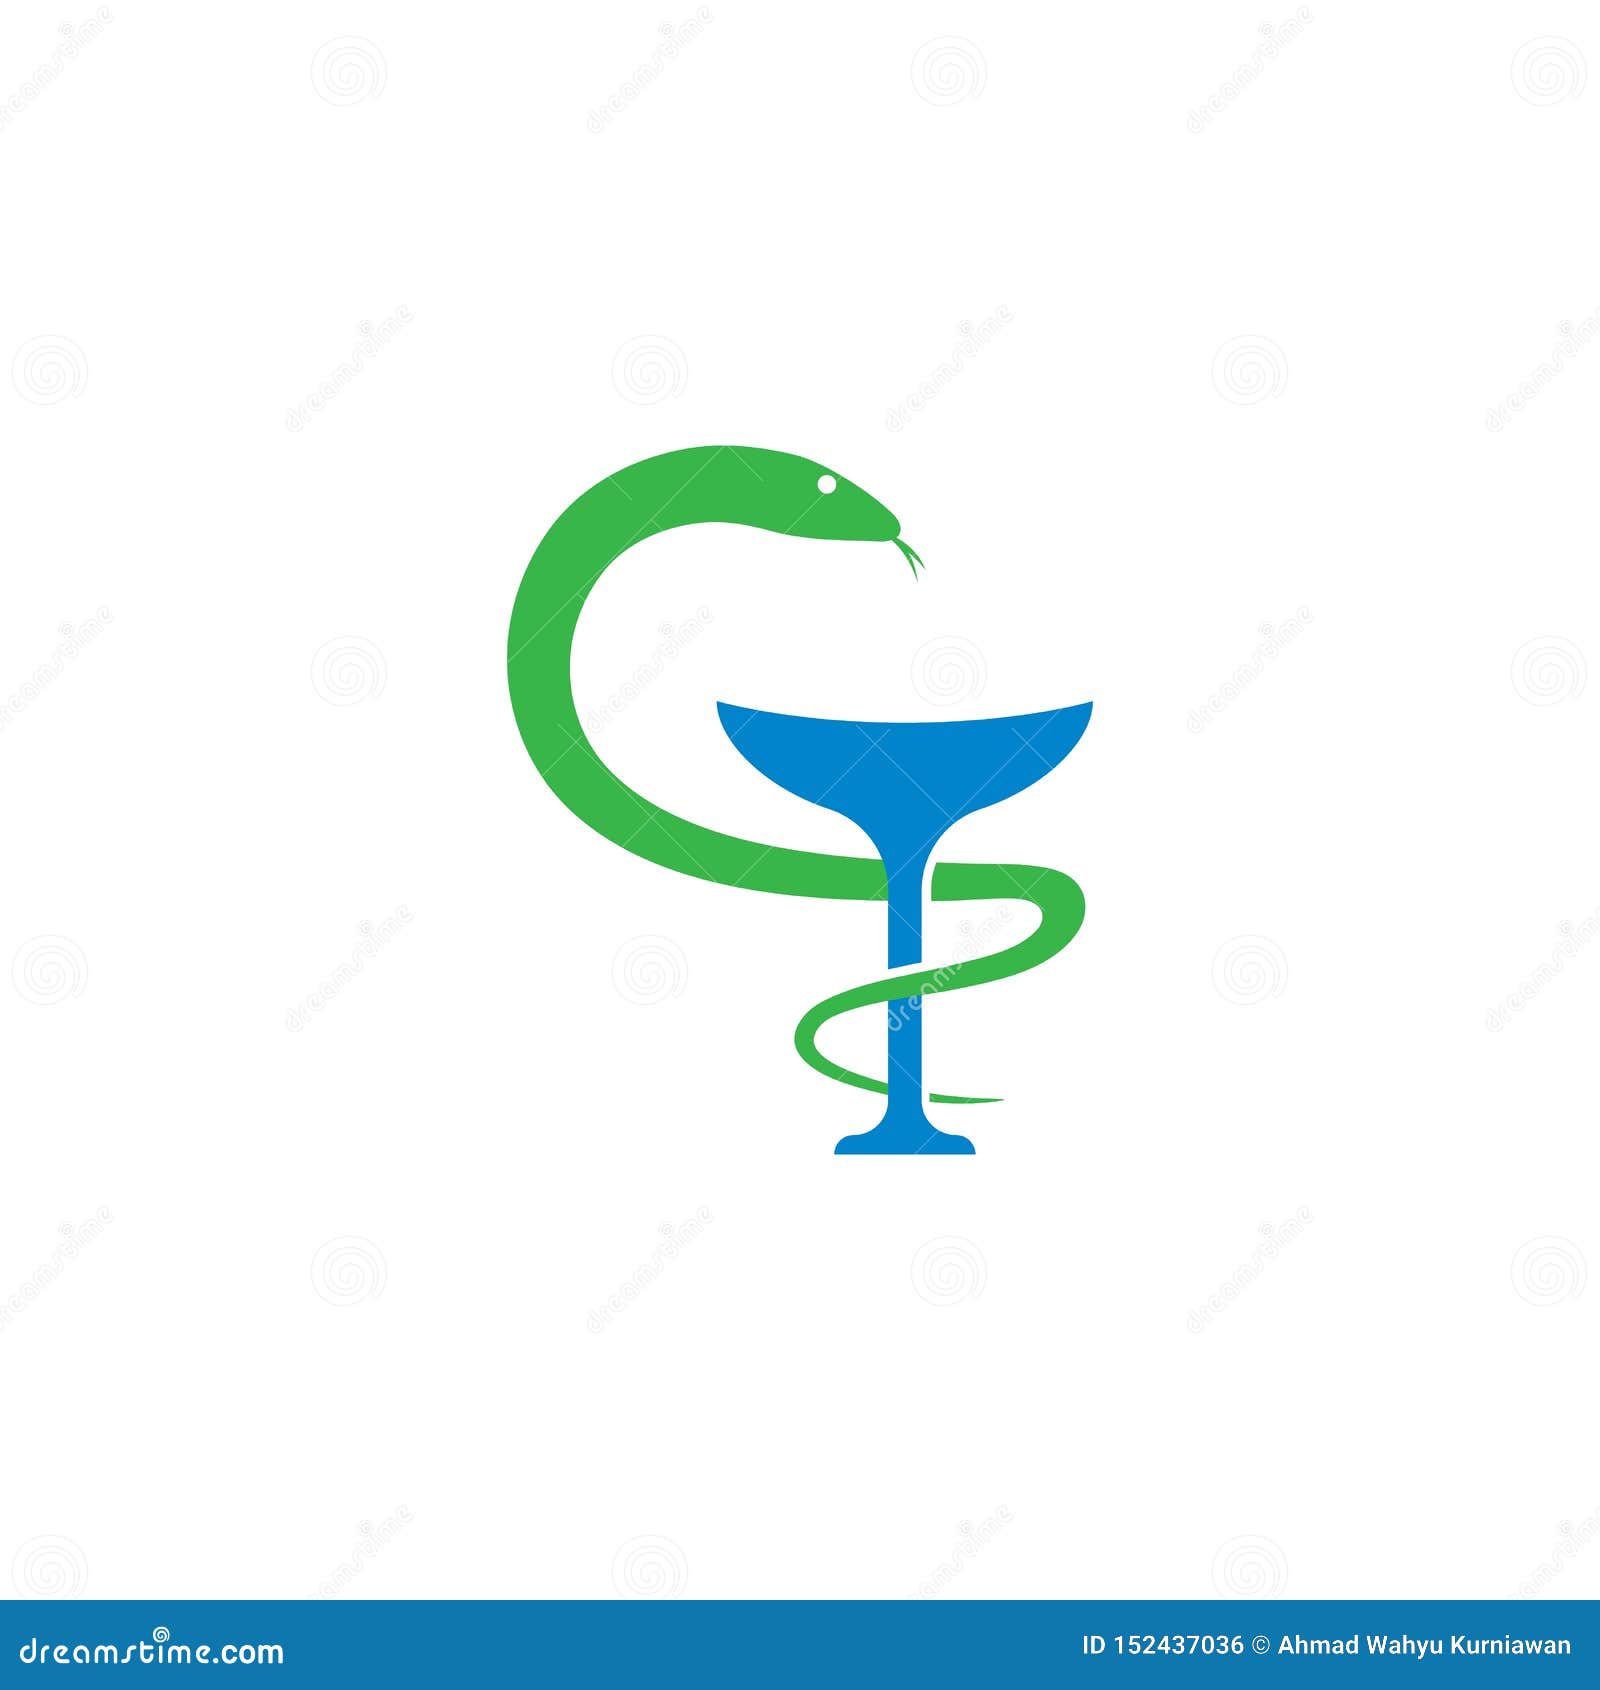 Pharmacy logo vector stock vector. Illustration of science - 152437036